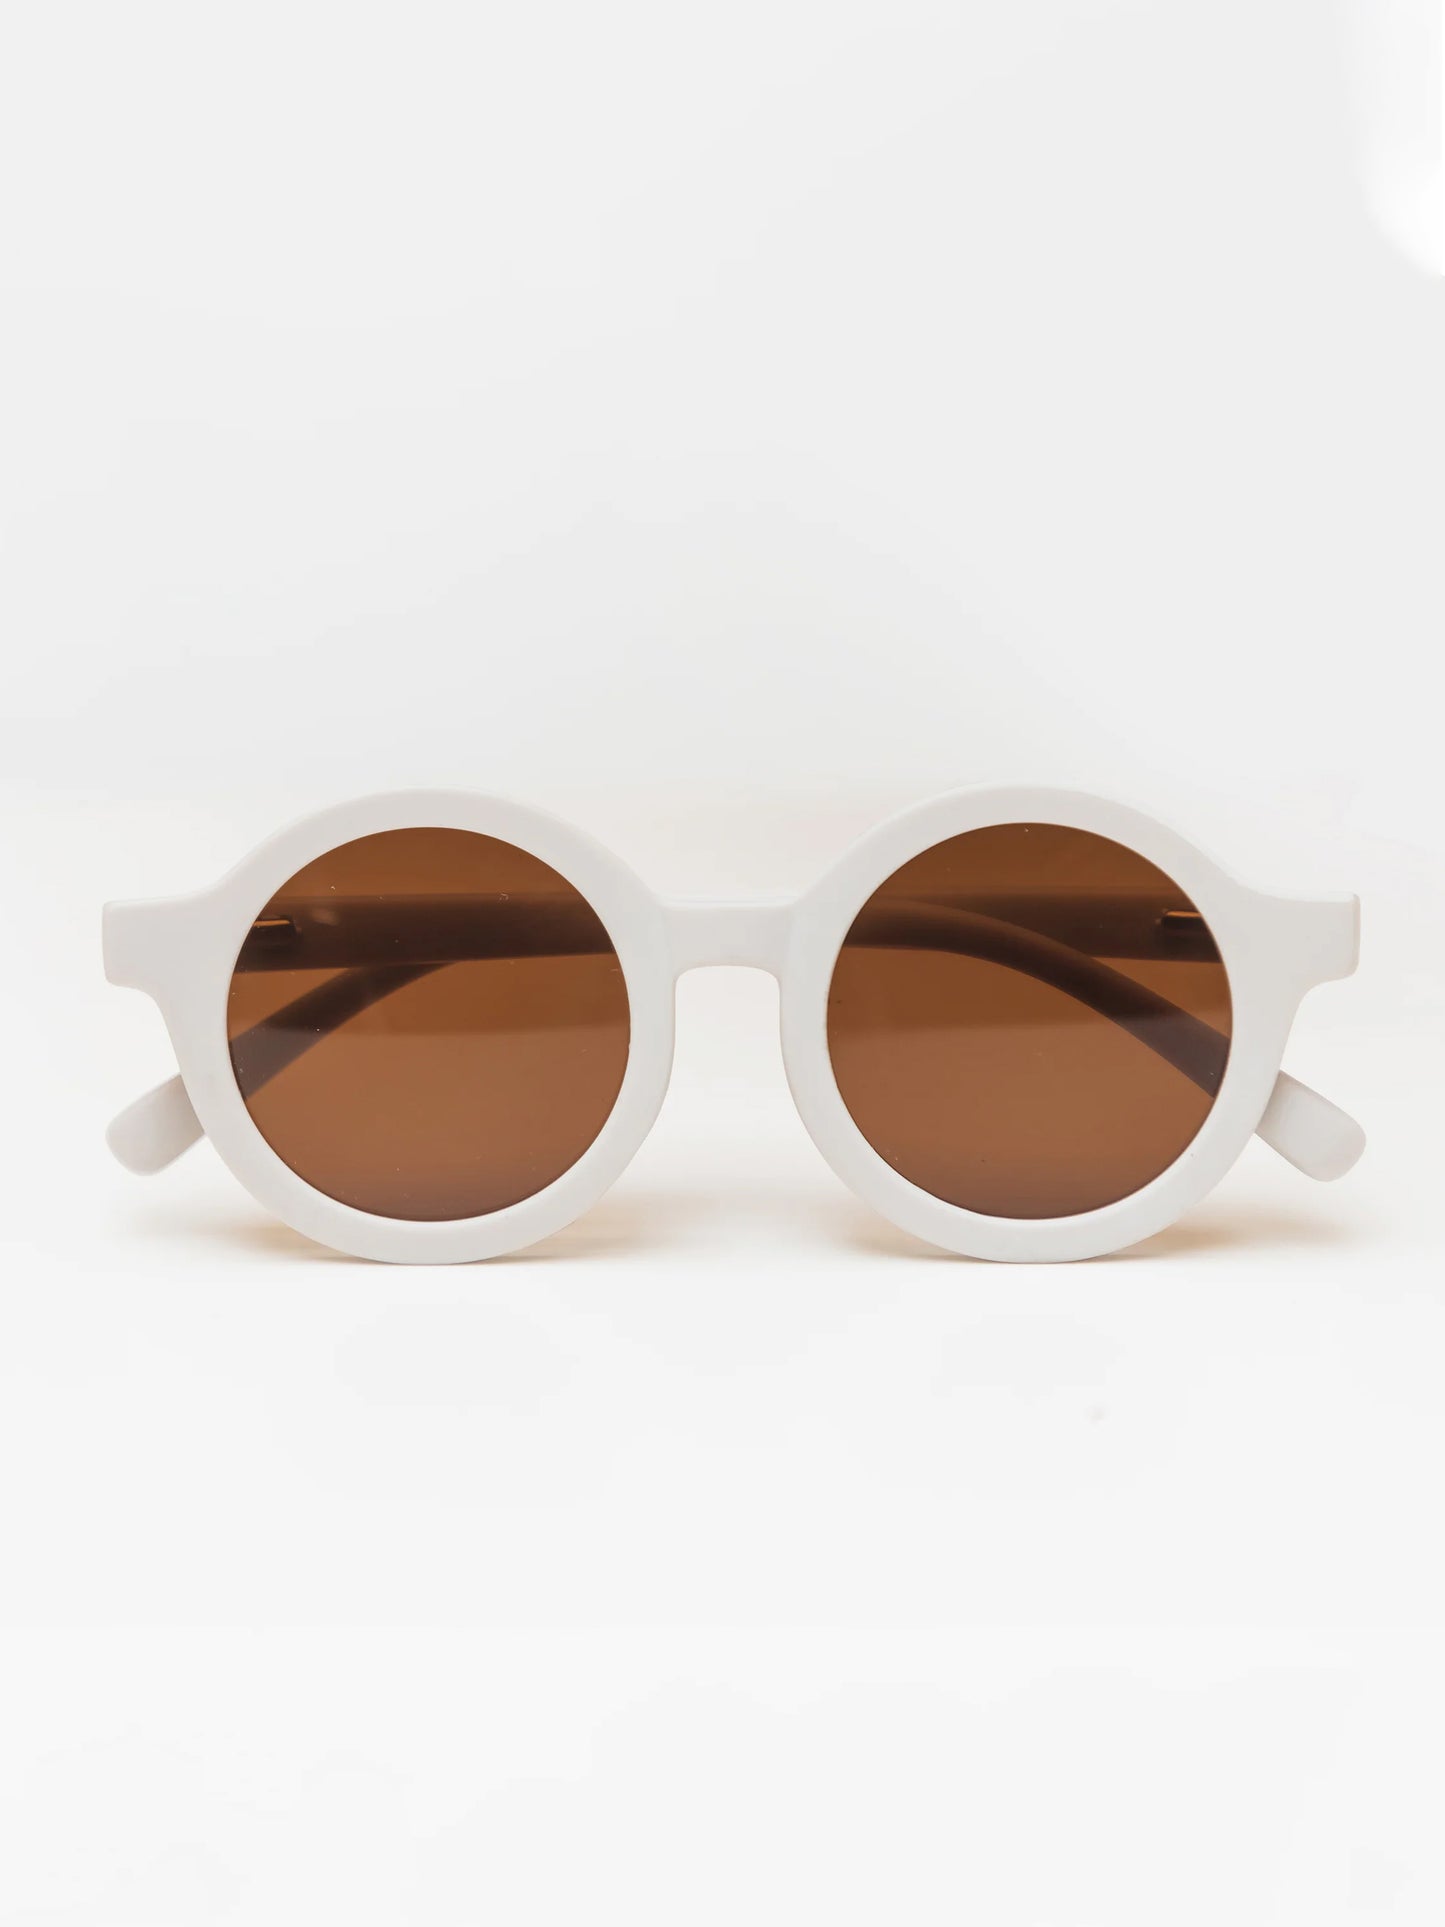 Coconut Recycled Plastic Sunglasses